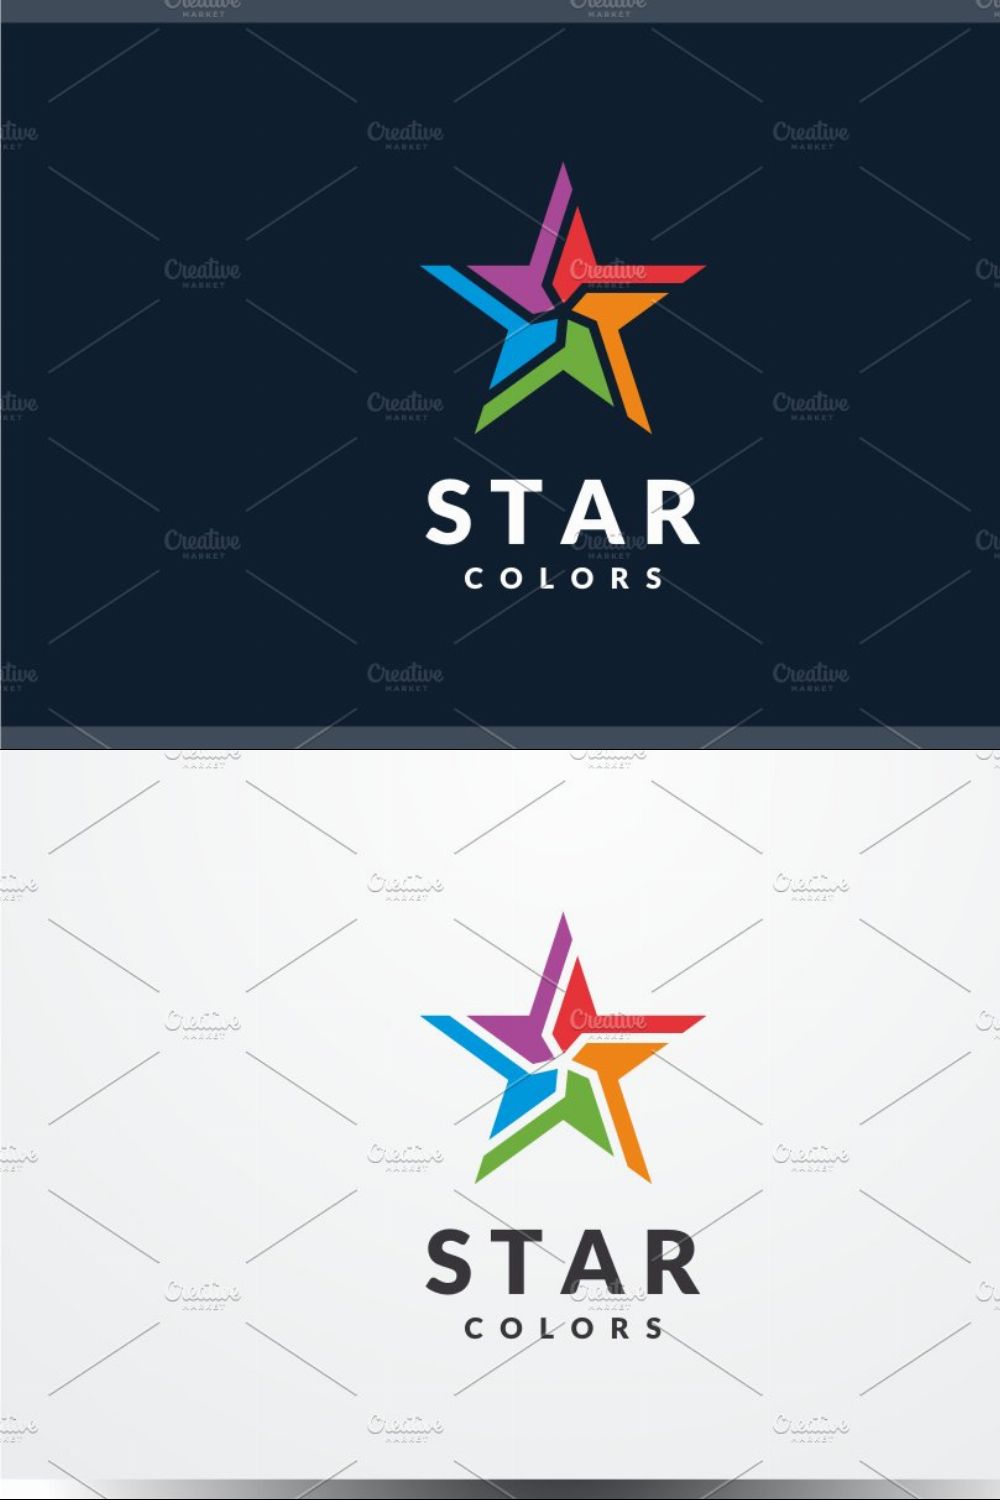 Star Colors Logo pinterest preview image.